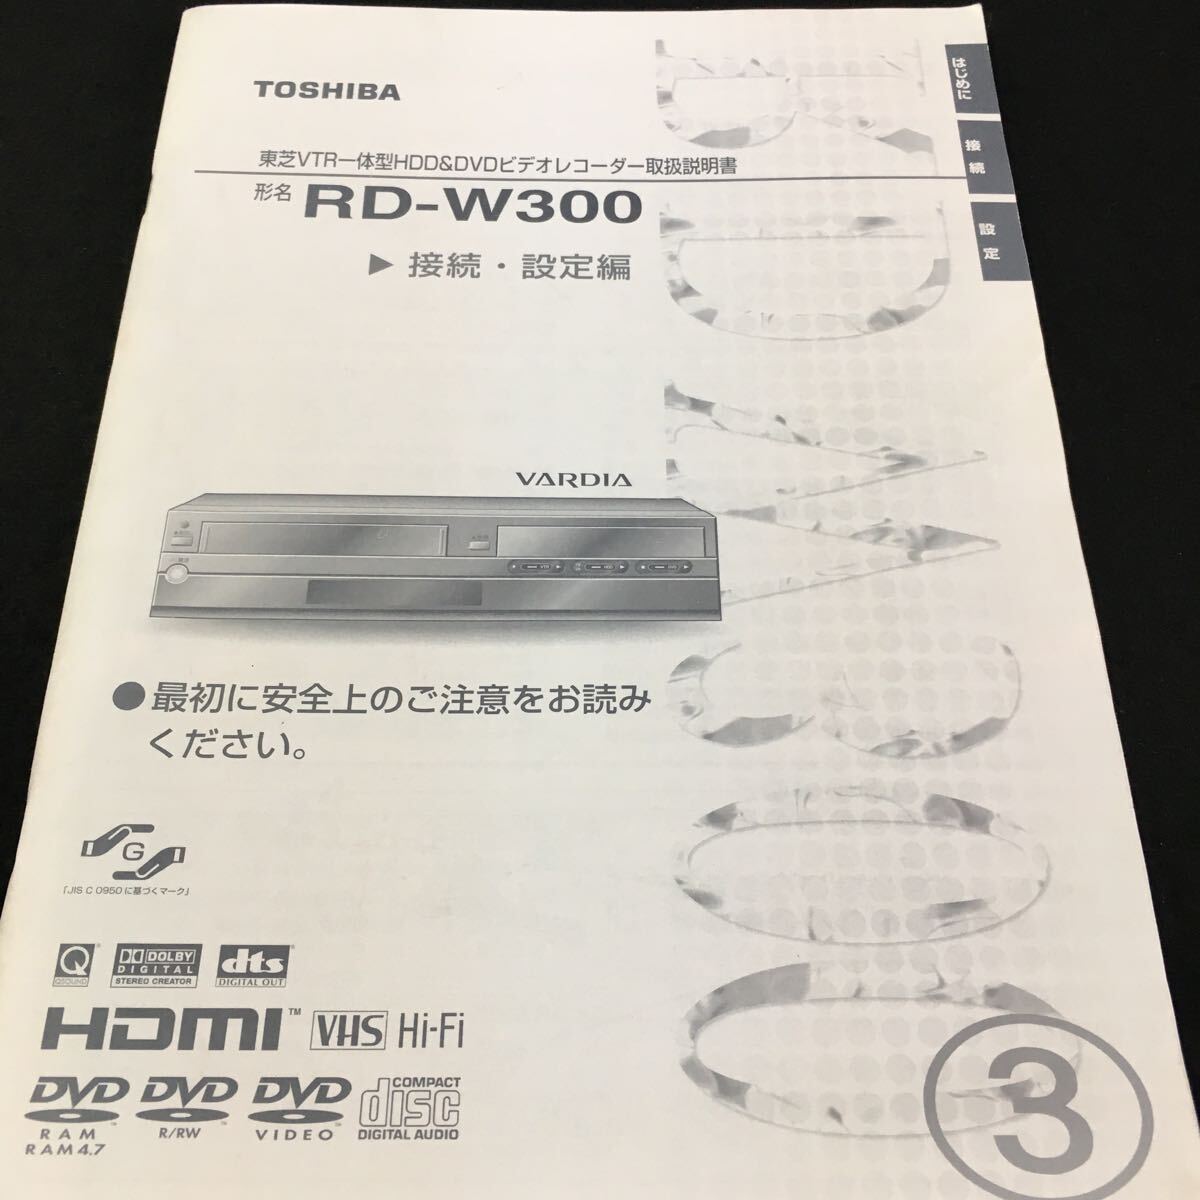 M5g-197 TOSHIBA 形名 RD-W300 接続・設定編 ●最初に安全上のご注意をお読みください。 ③ _画像1